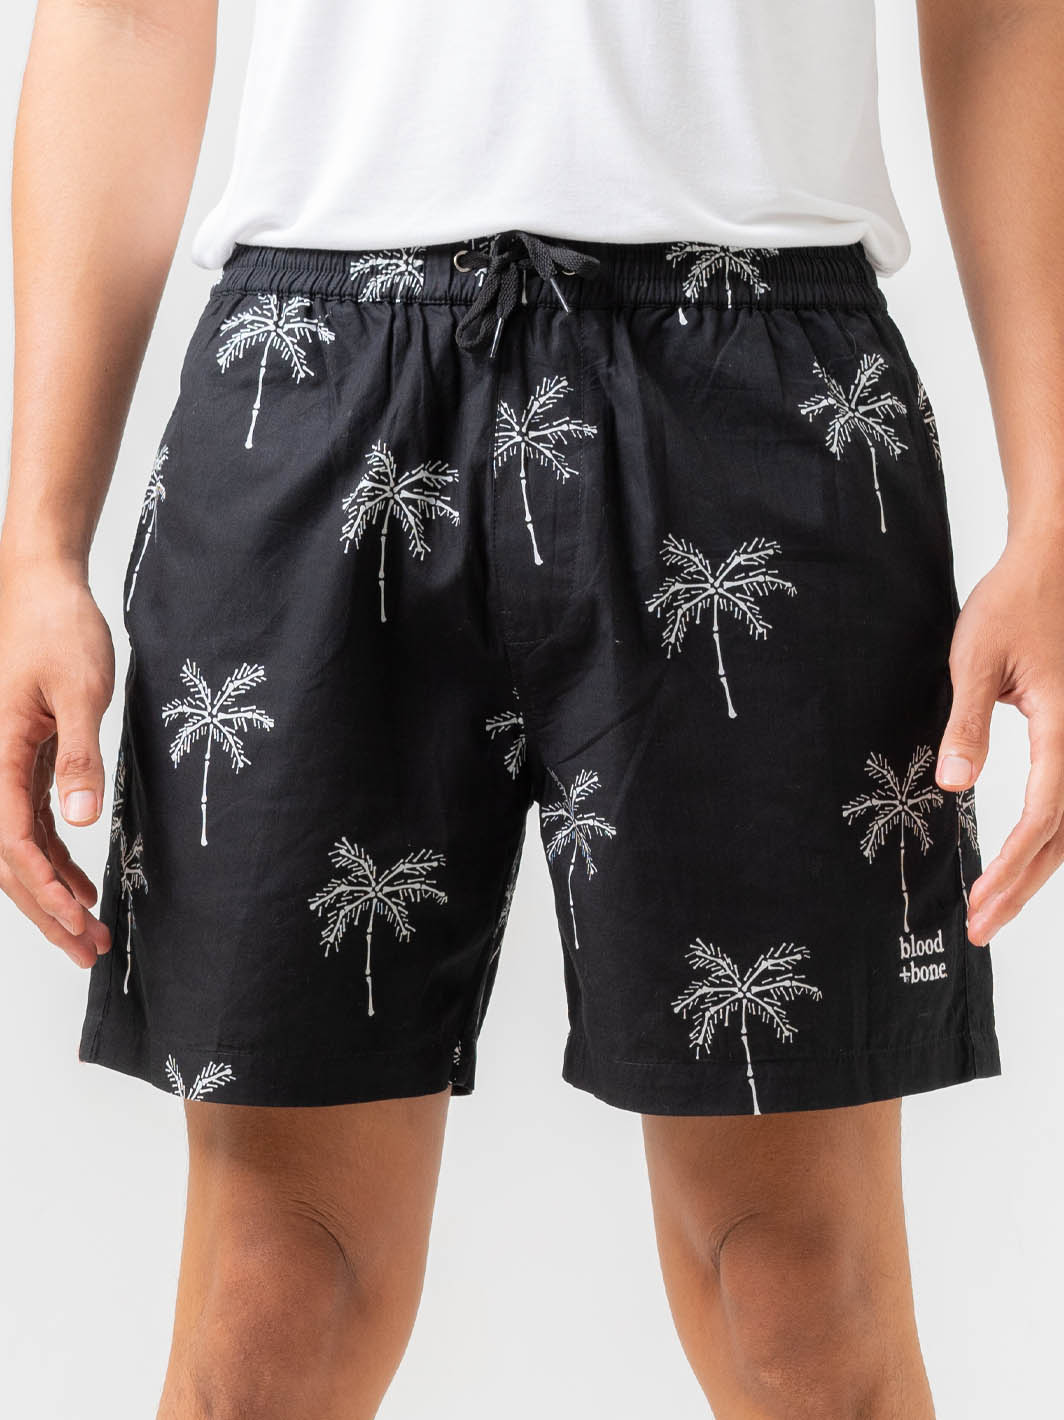 BONES Shorts - Tropical Print Shorts by Blood+Bone Bali